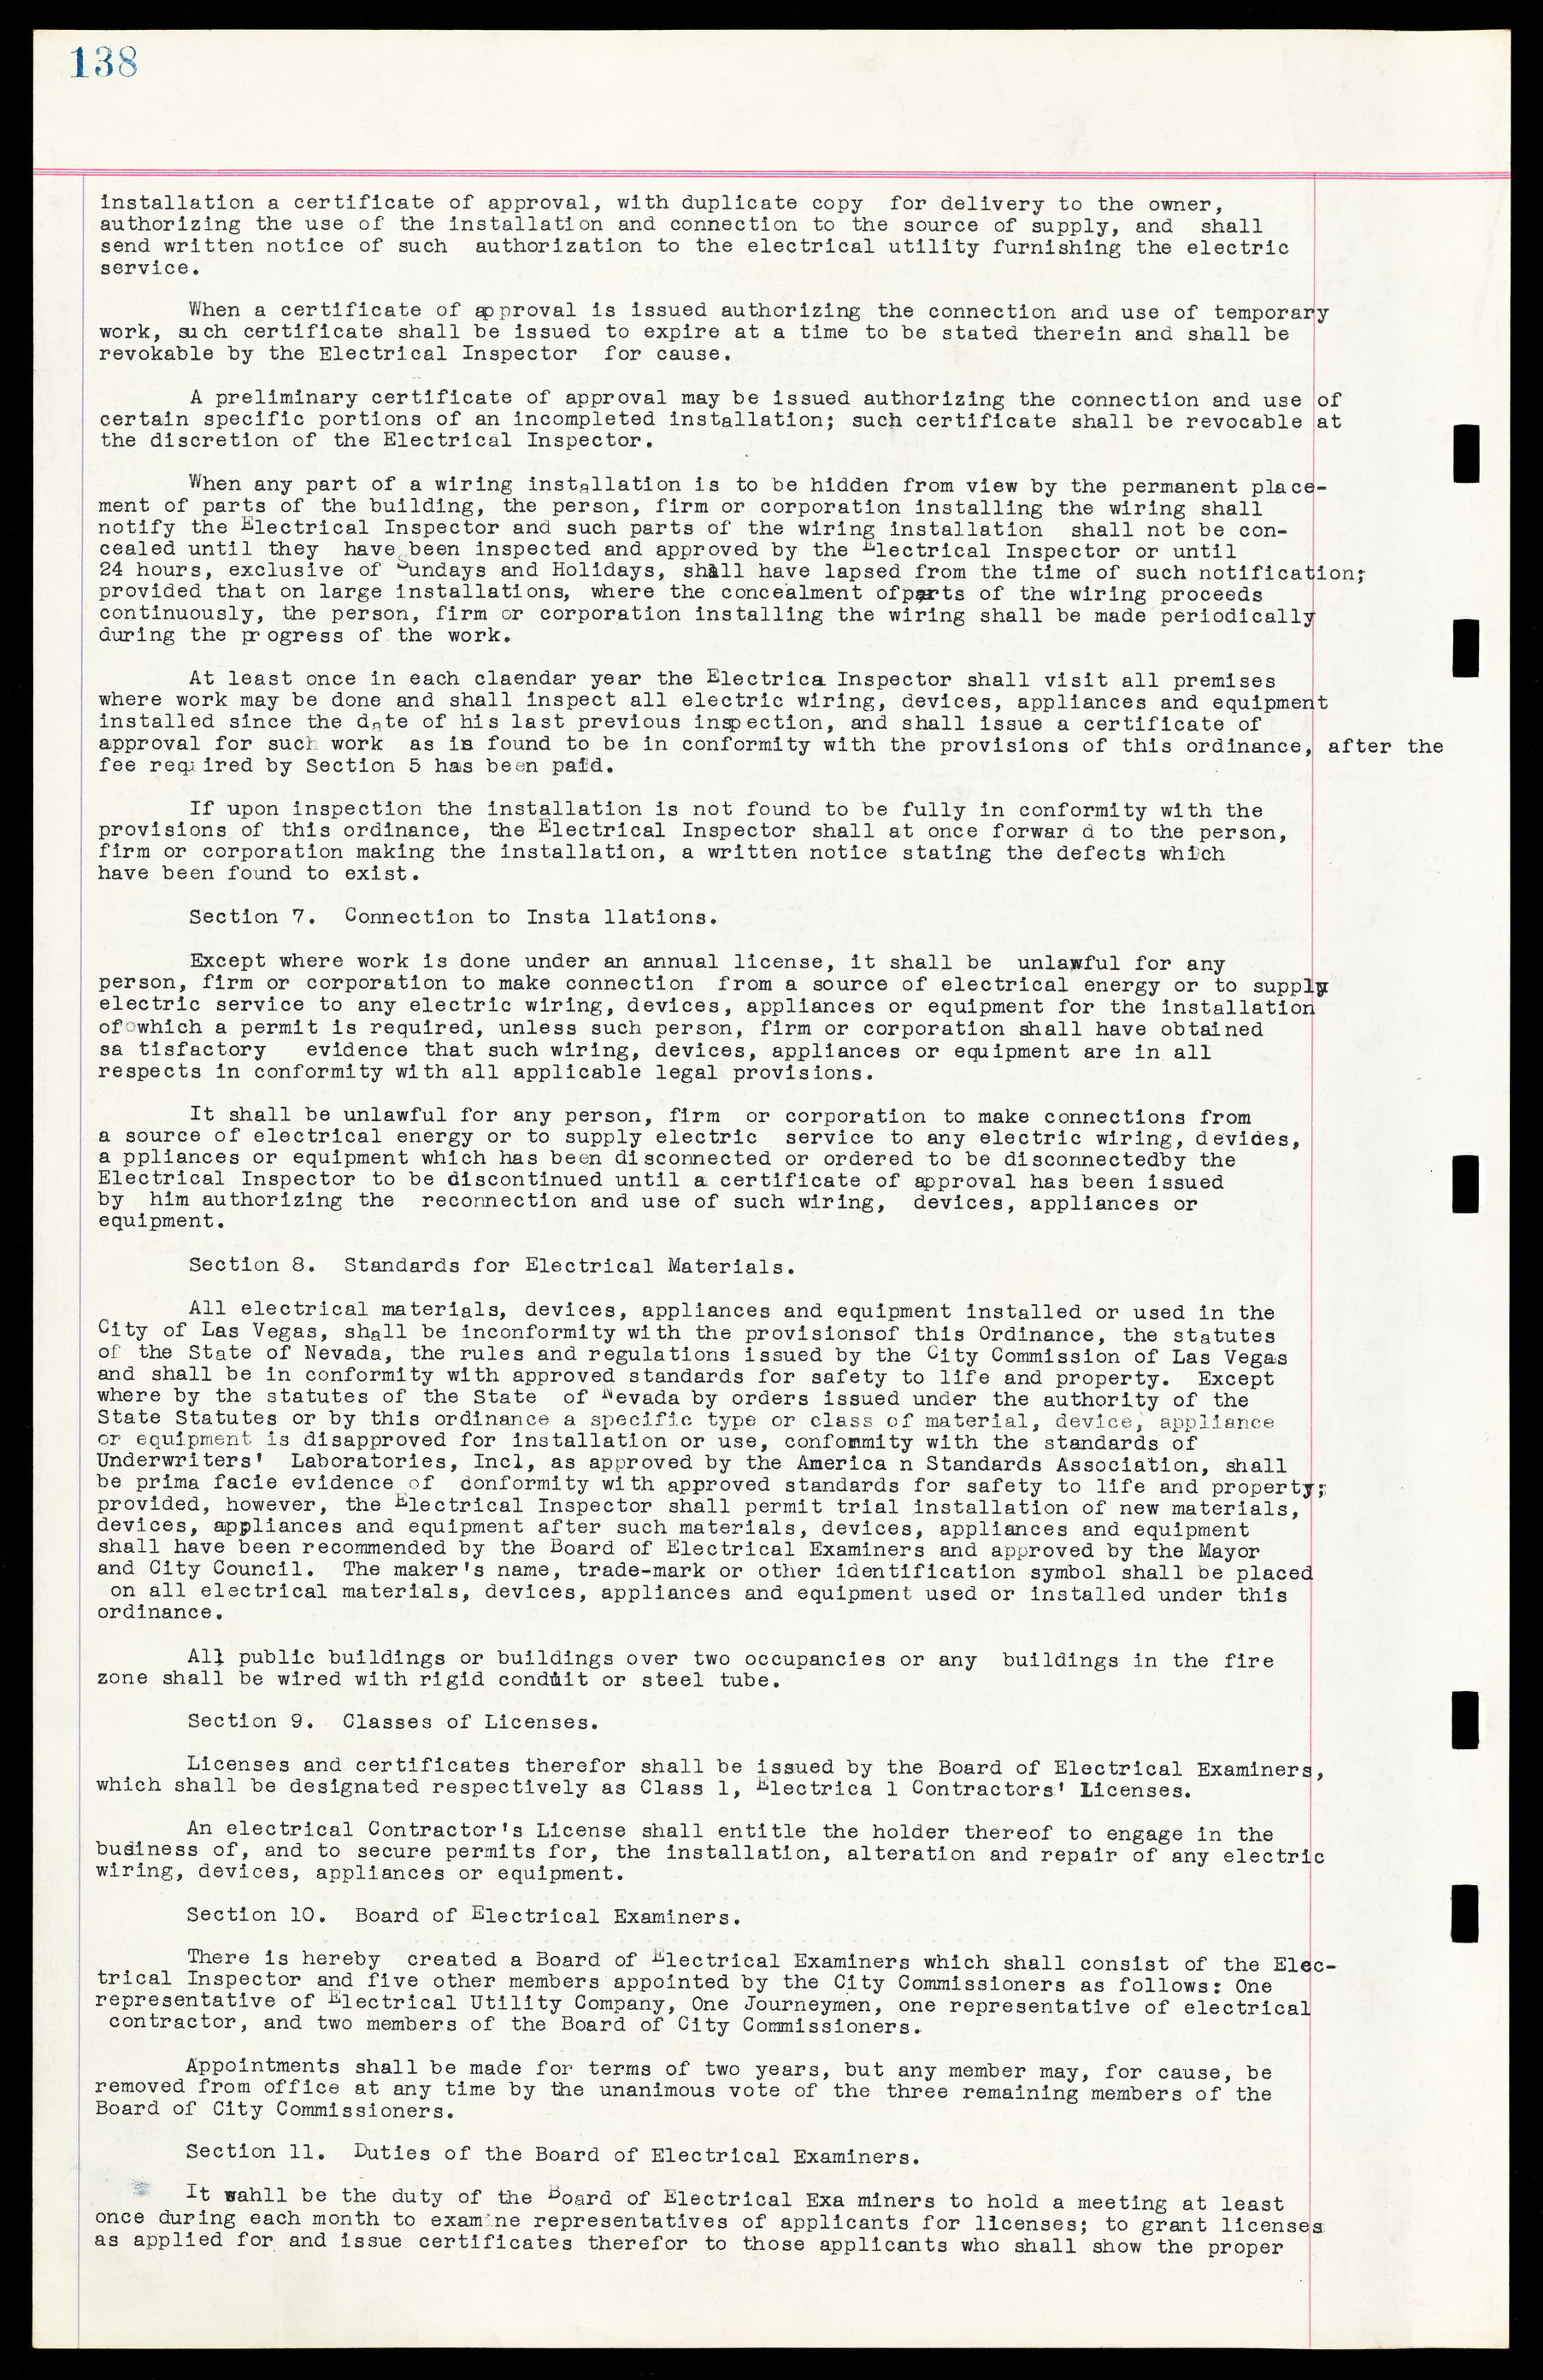 Las Vegas City Ordinances, March 31, 1933 to October 25, 1950, lvc000014-158